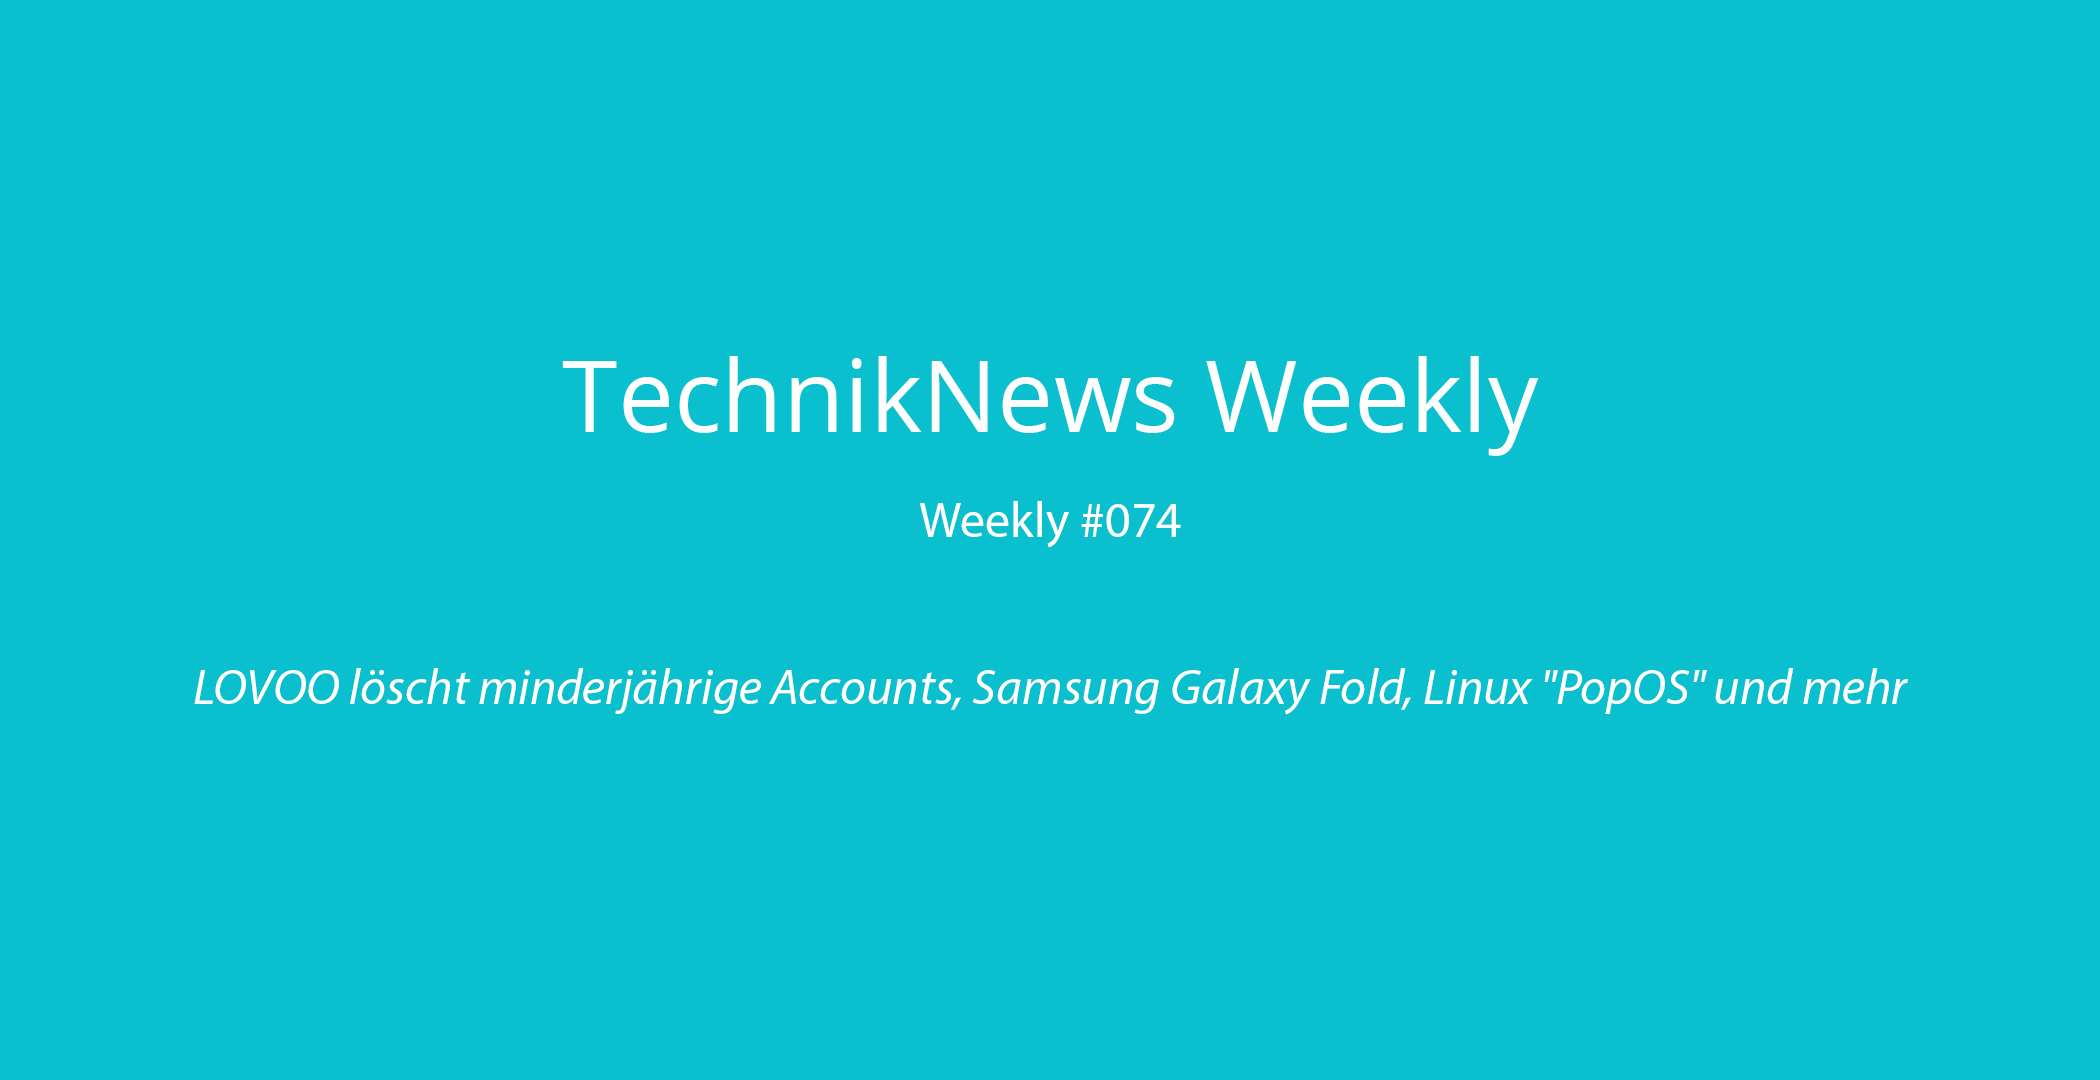 TechnikNews Weekly # 074